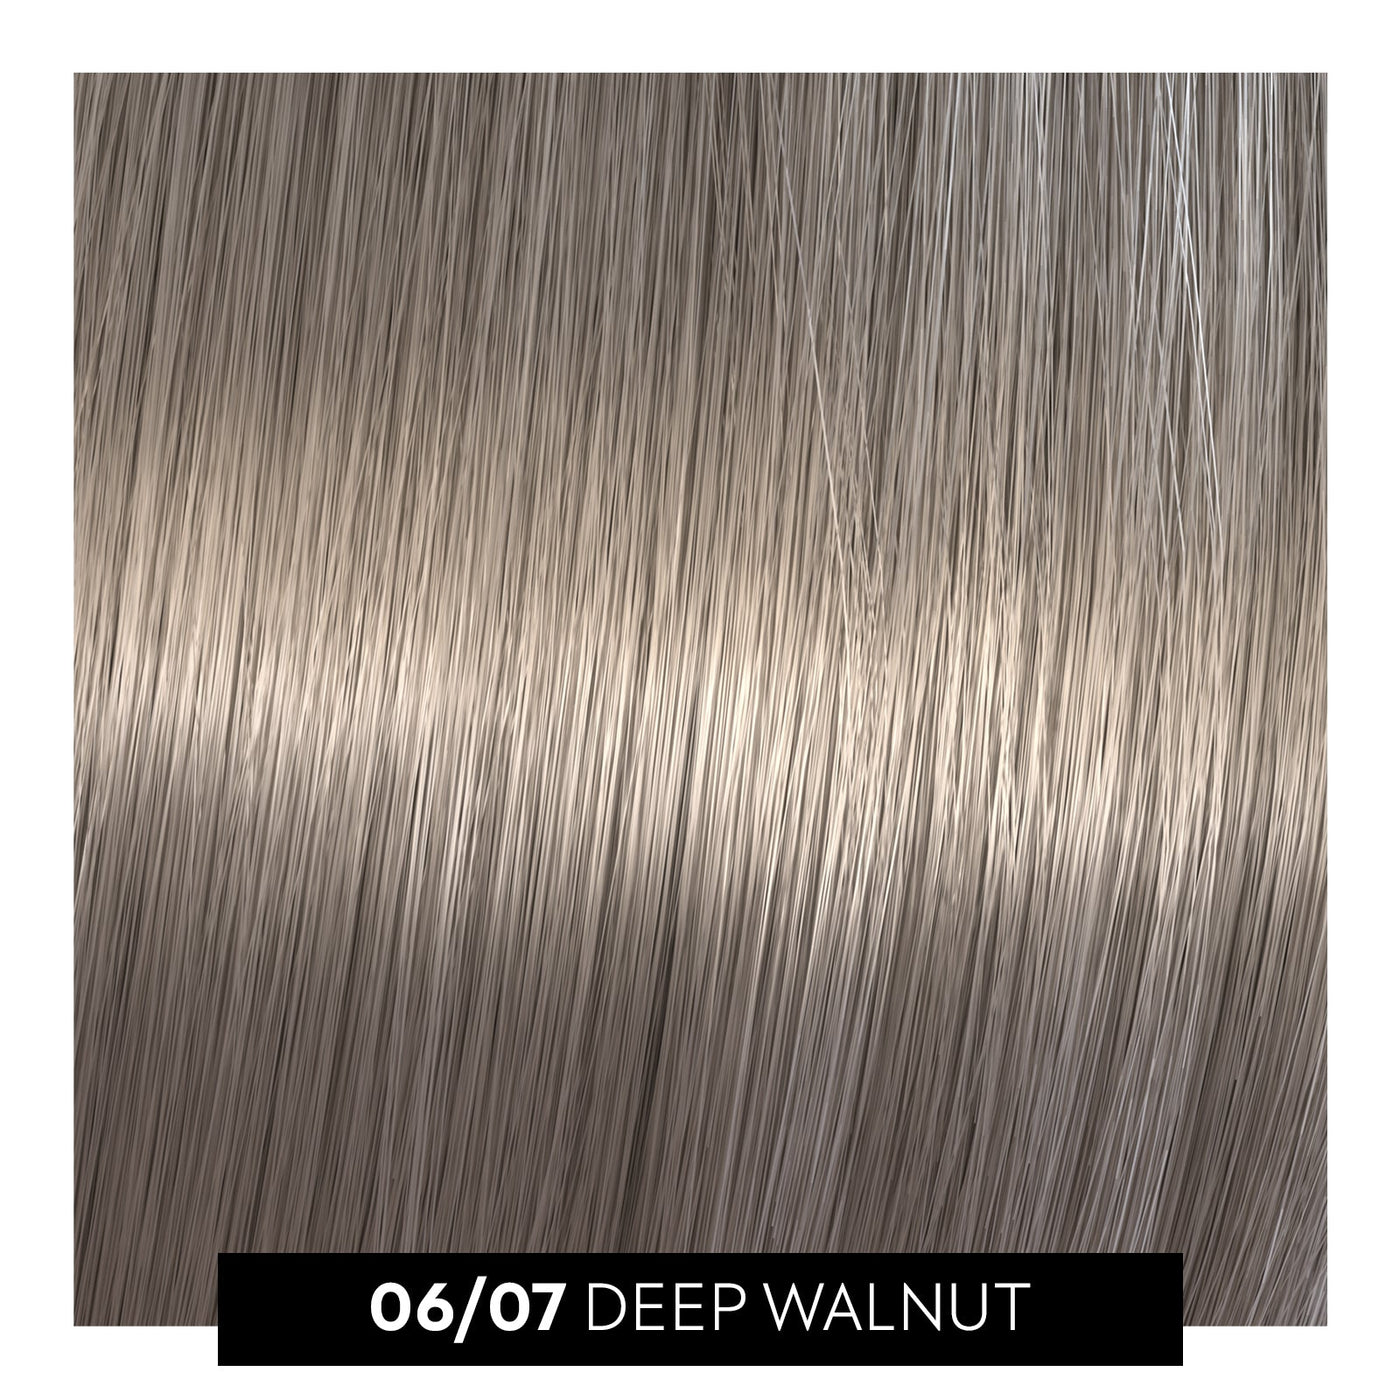 06/07 deep walnut